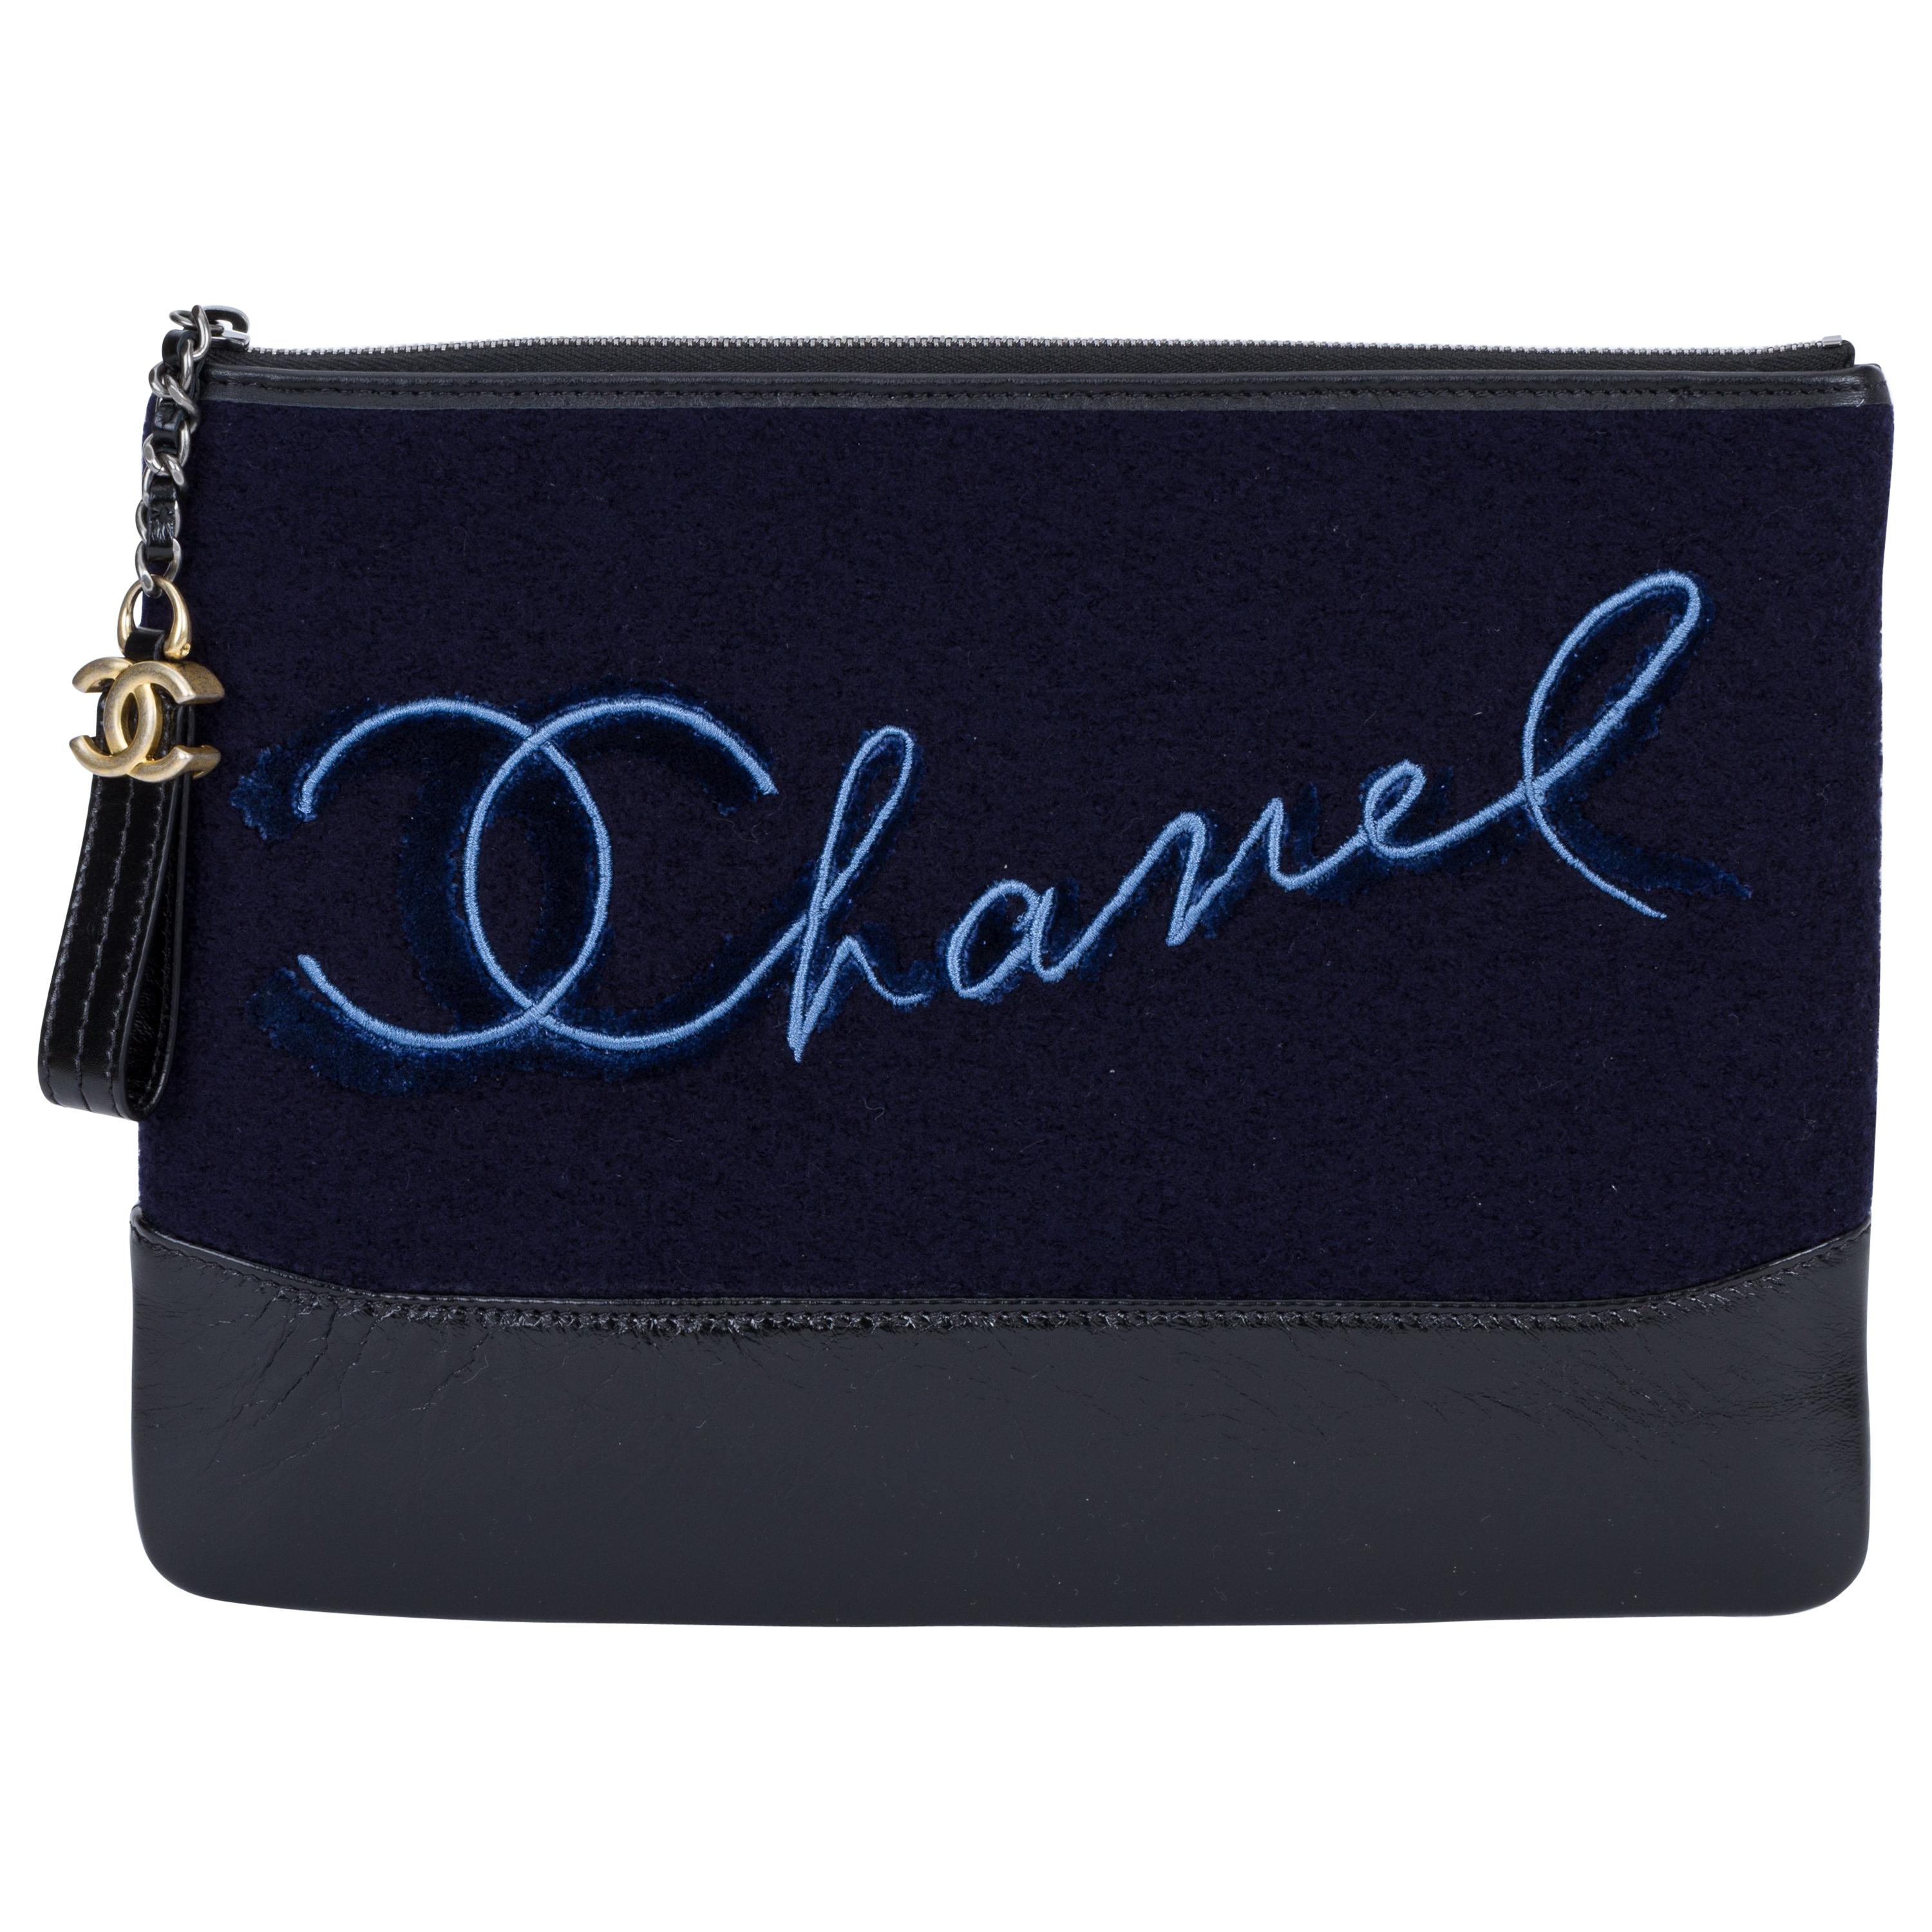 New in Box Chanel Navy Paris Salzburg Clutch Bag